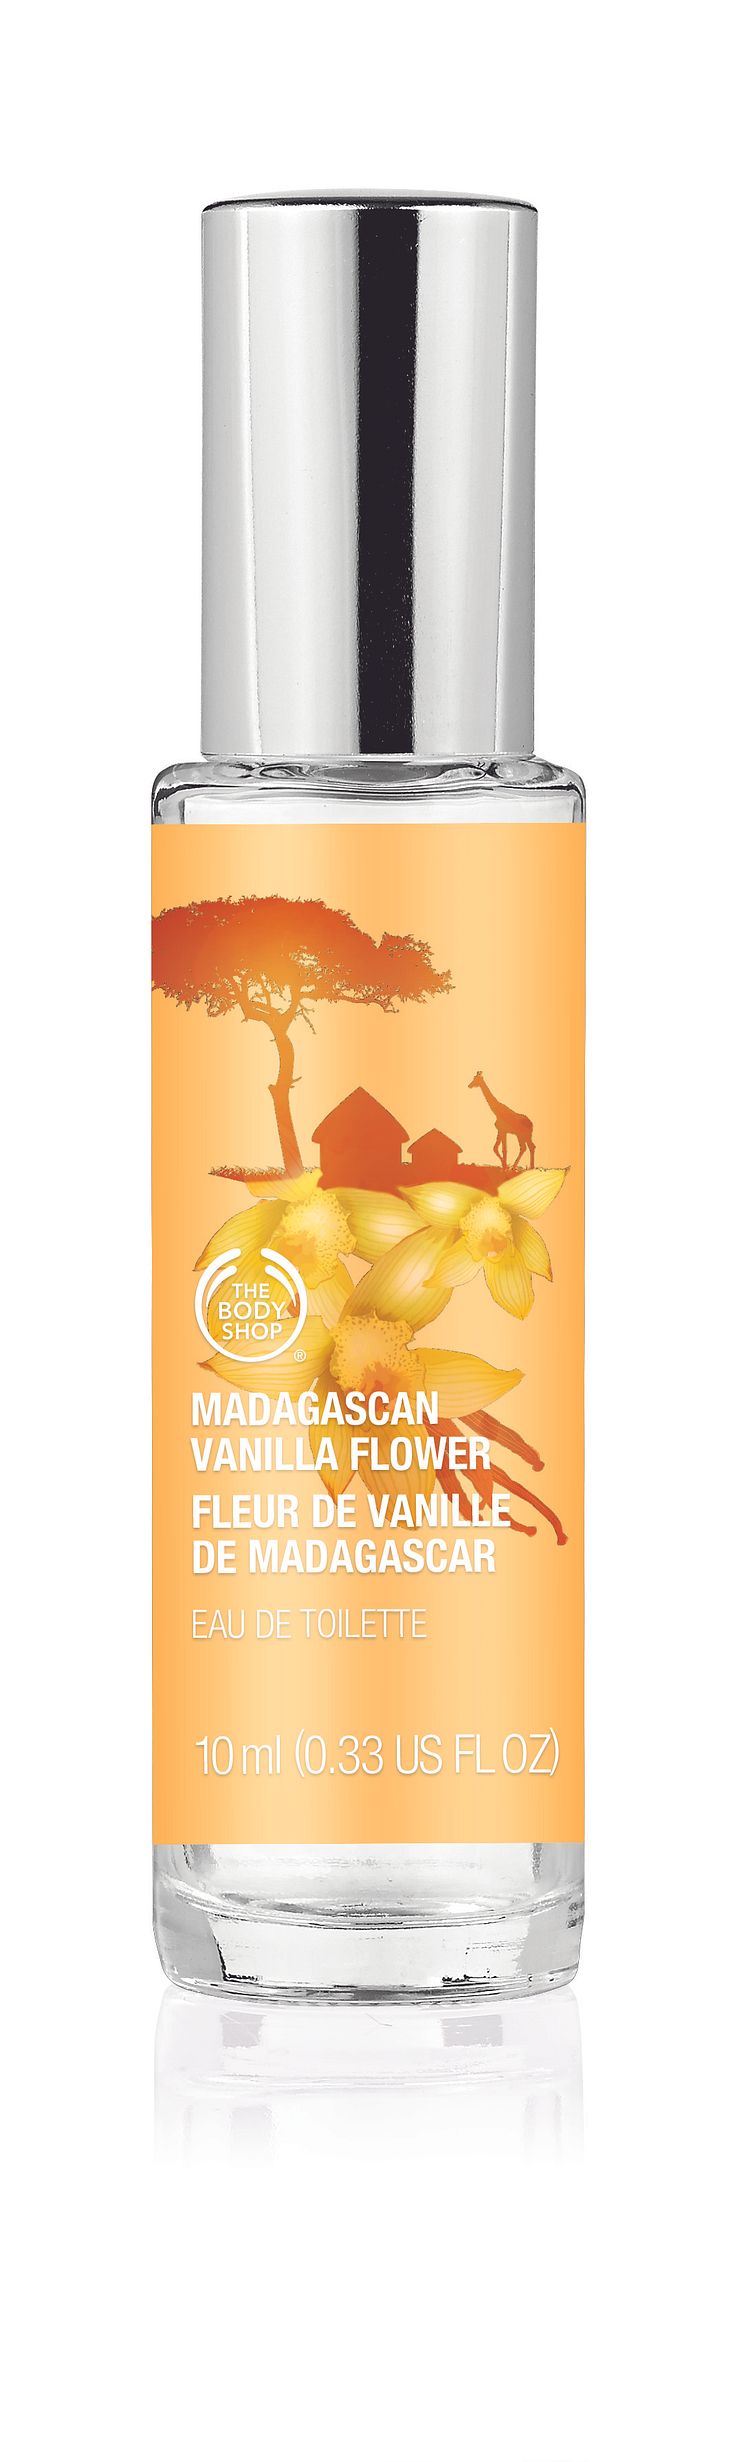 Madagascan Vanilla Flower Mini EdT